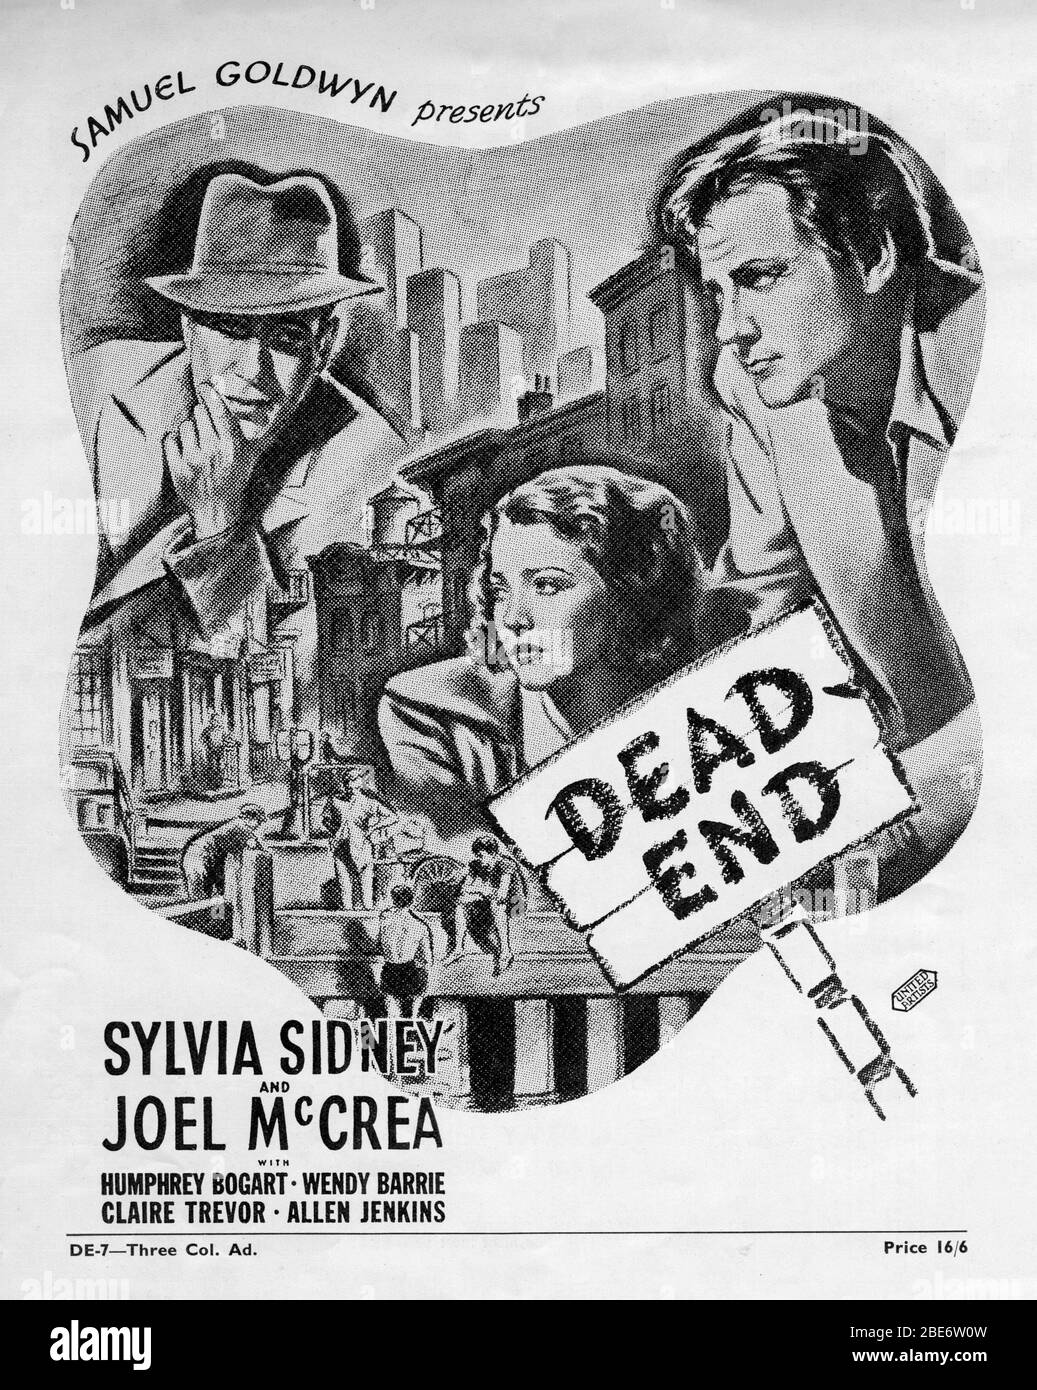 Dead End (1937 film) - Wikipedia